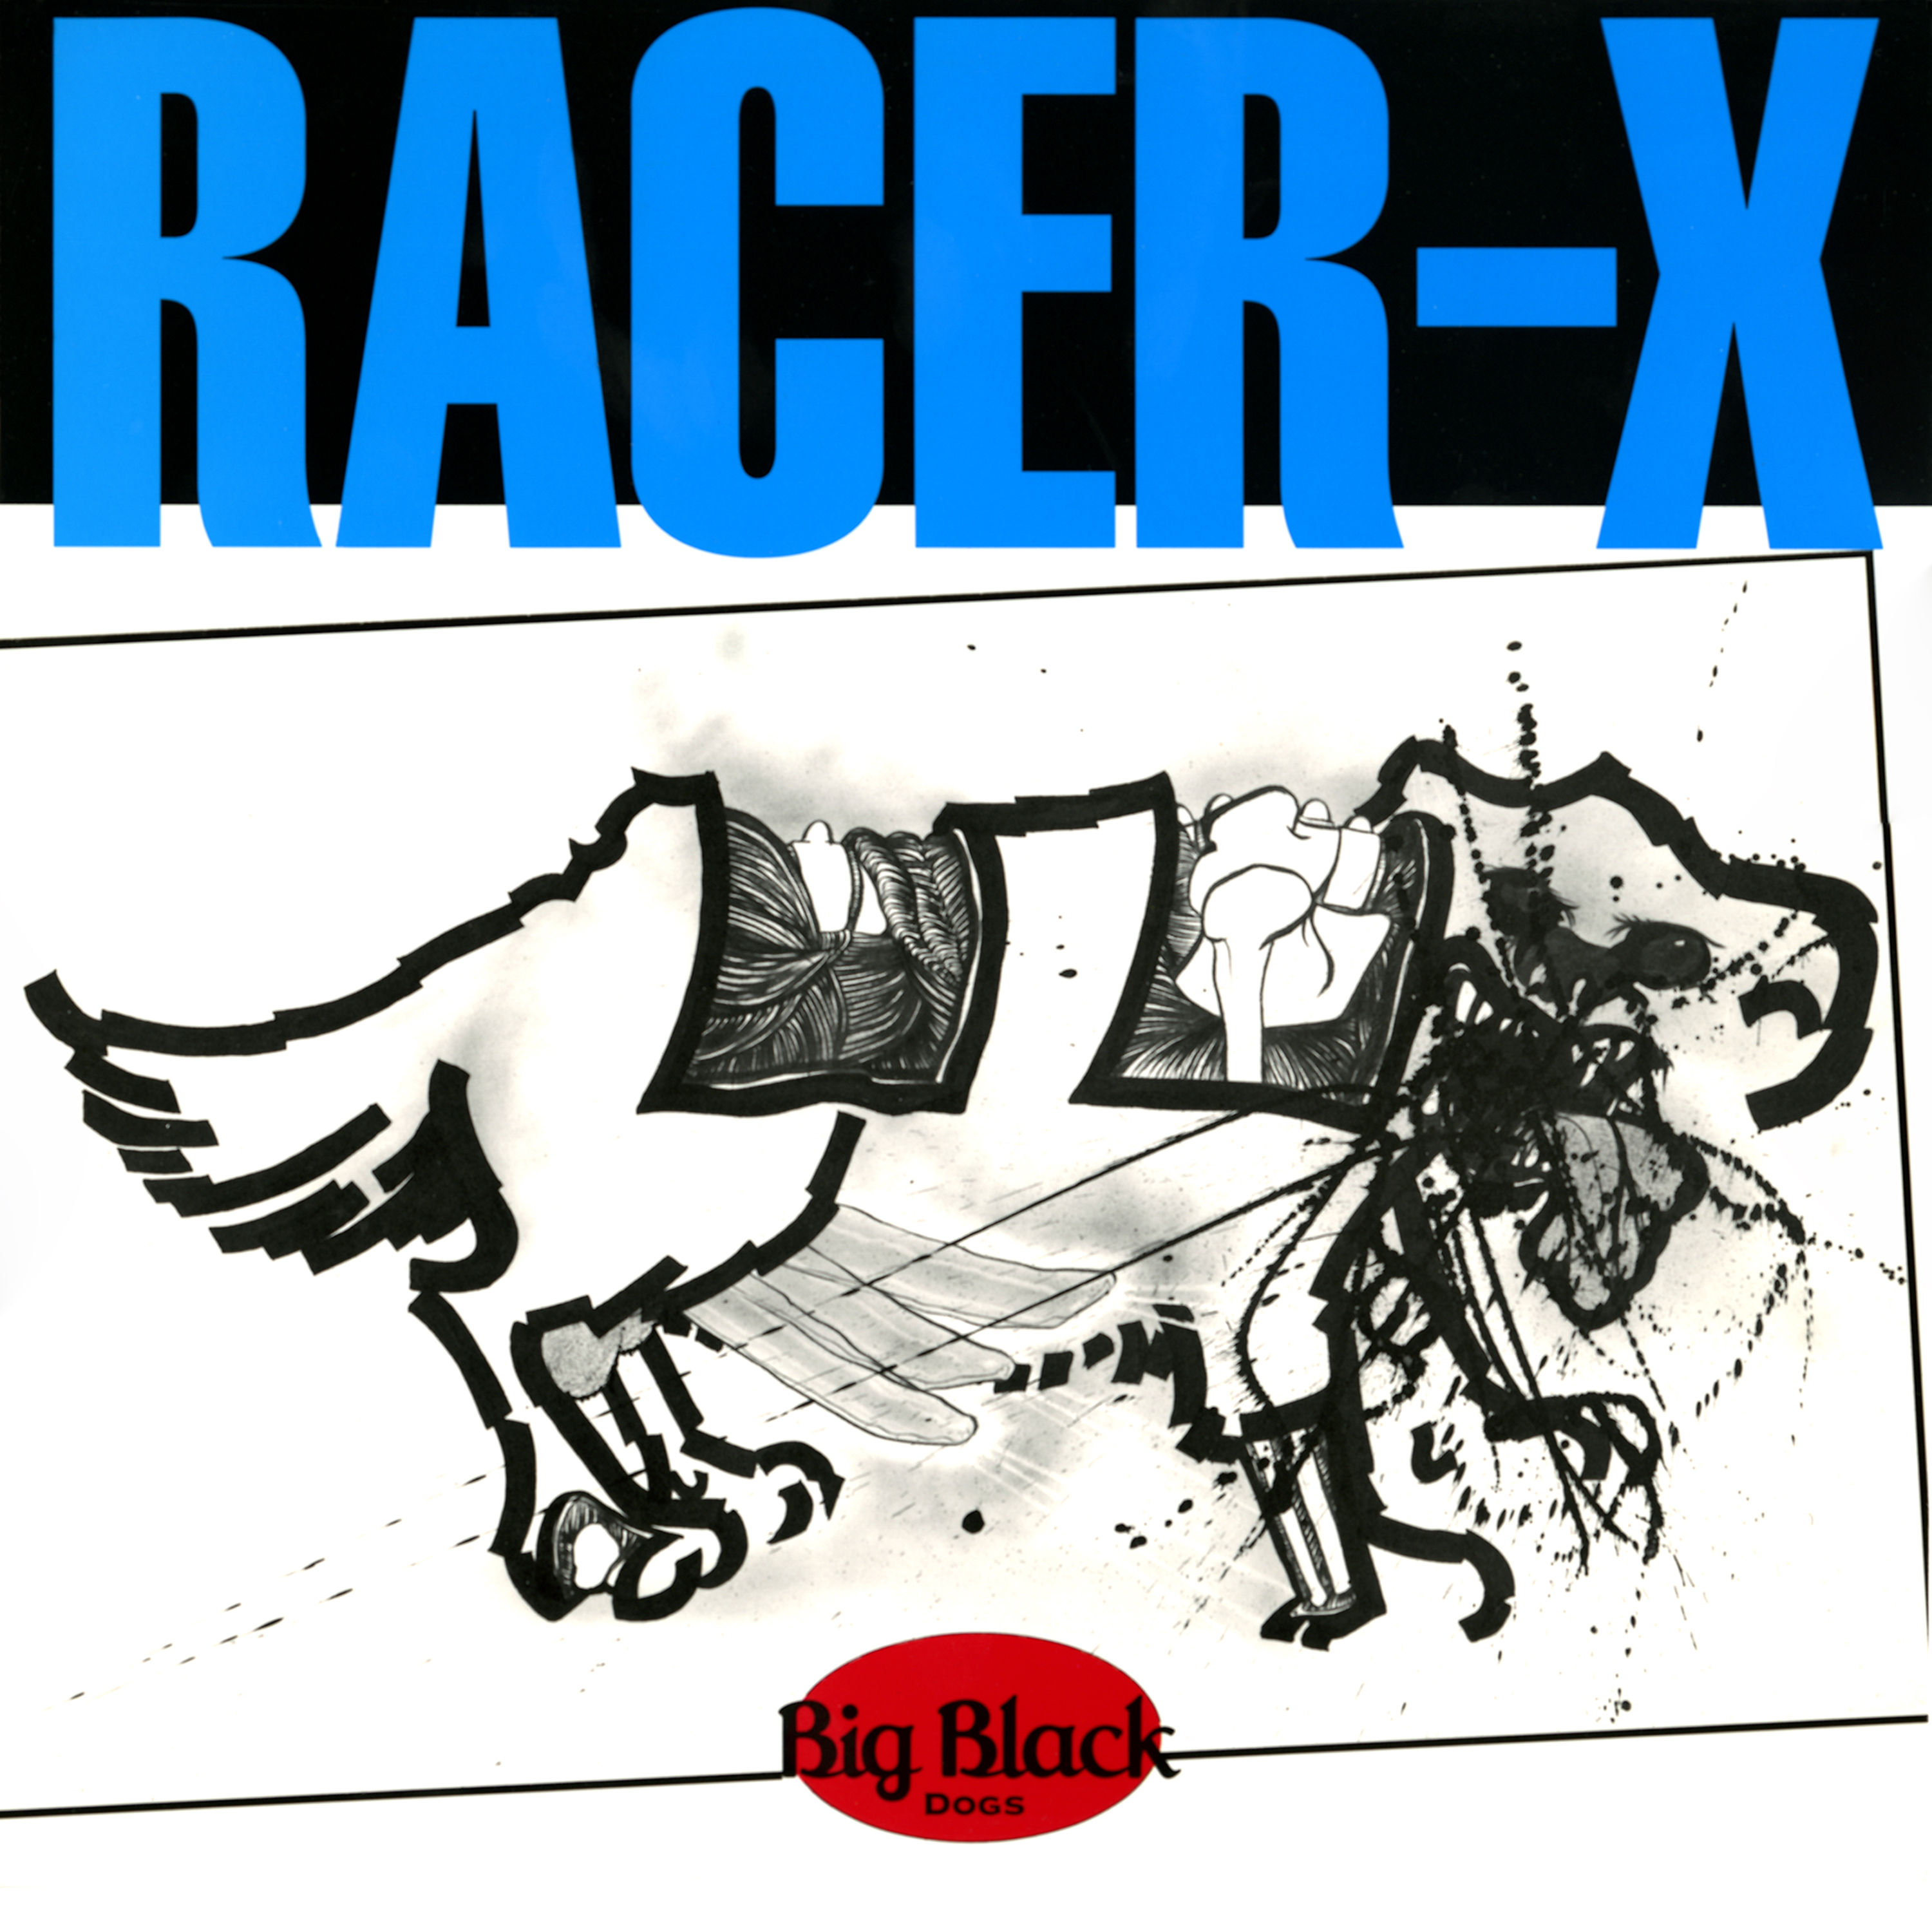 Big Black - Racer X (Reissue)